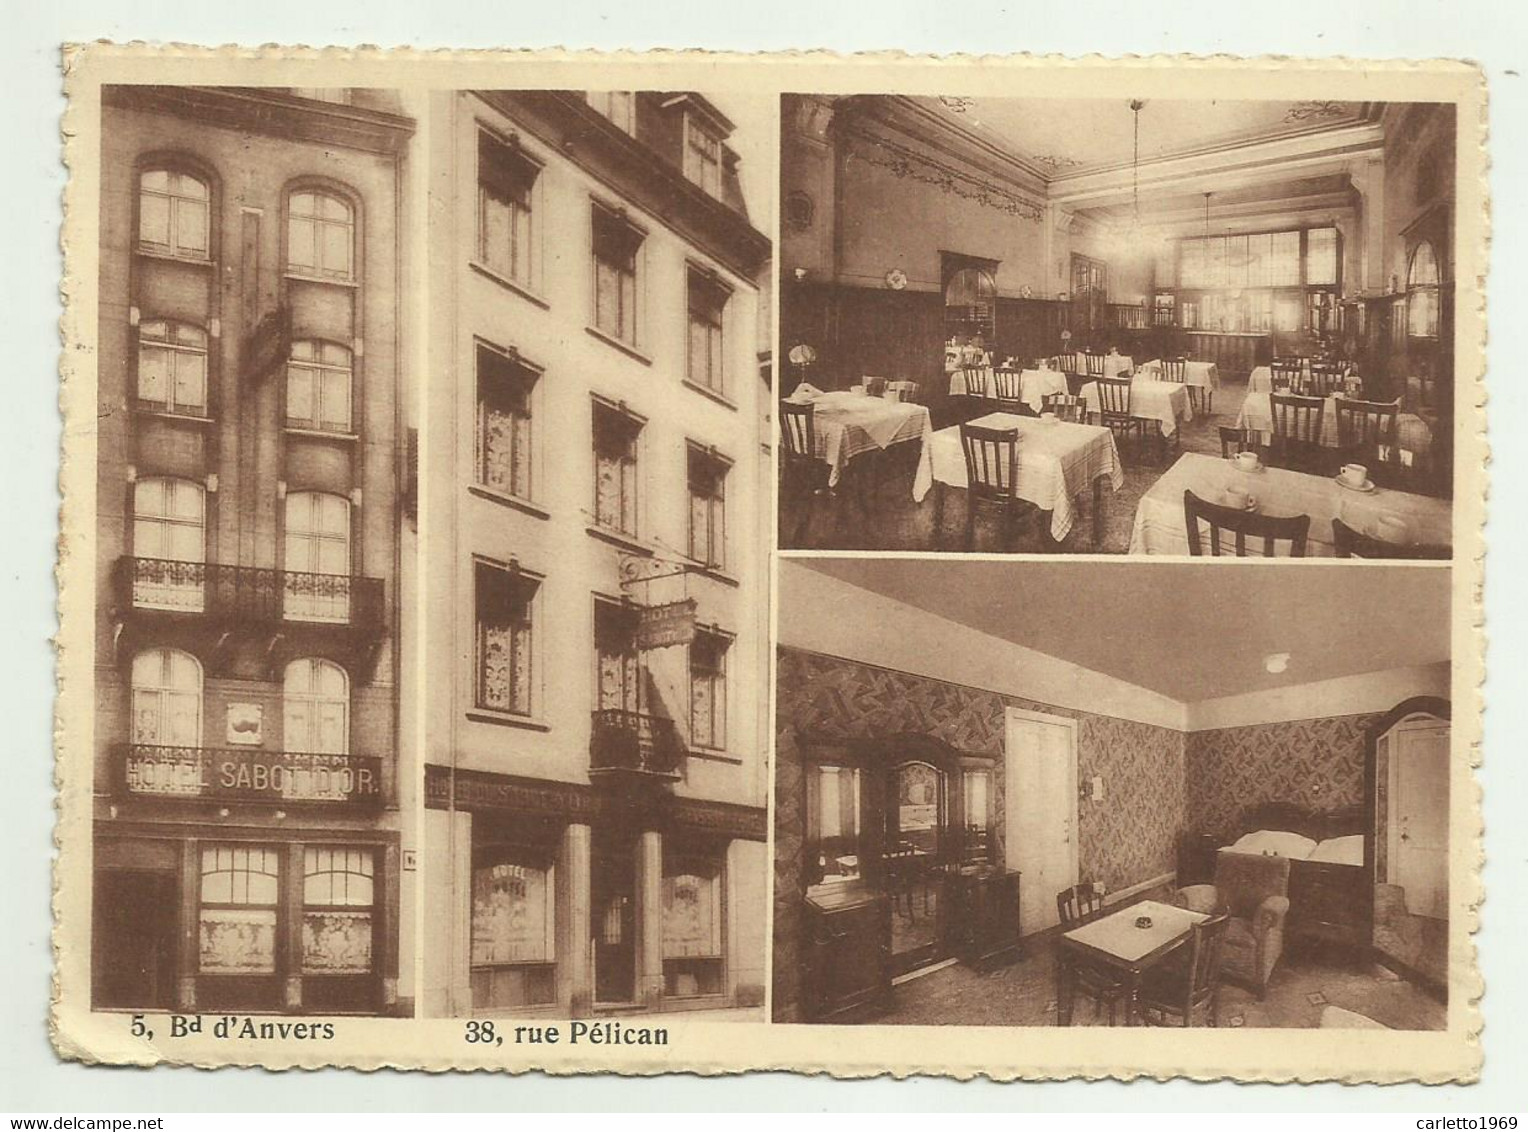 BRUXELLES NORD - HOTEL DU SABOT D'OR  - VIAGGIATA  FG - Cafés, Hotels, Restaurants